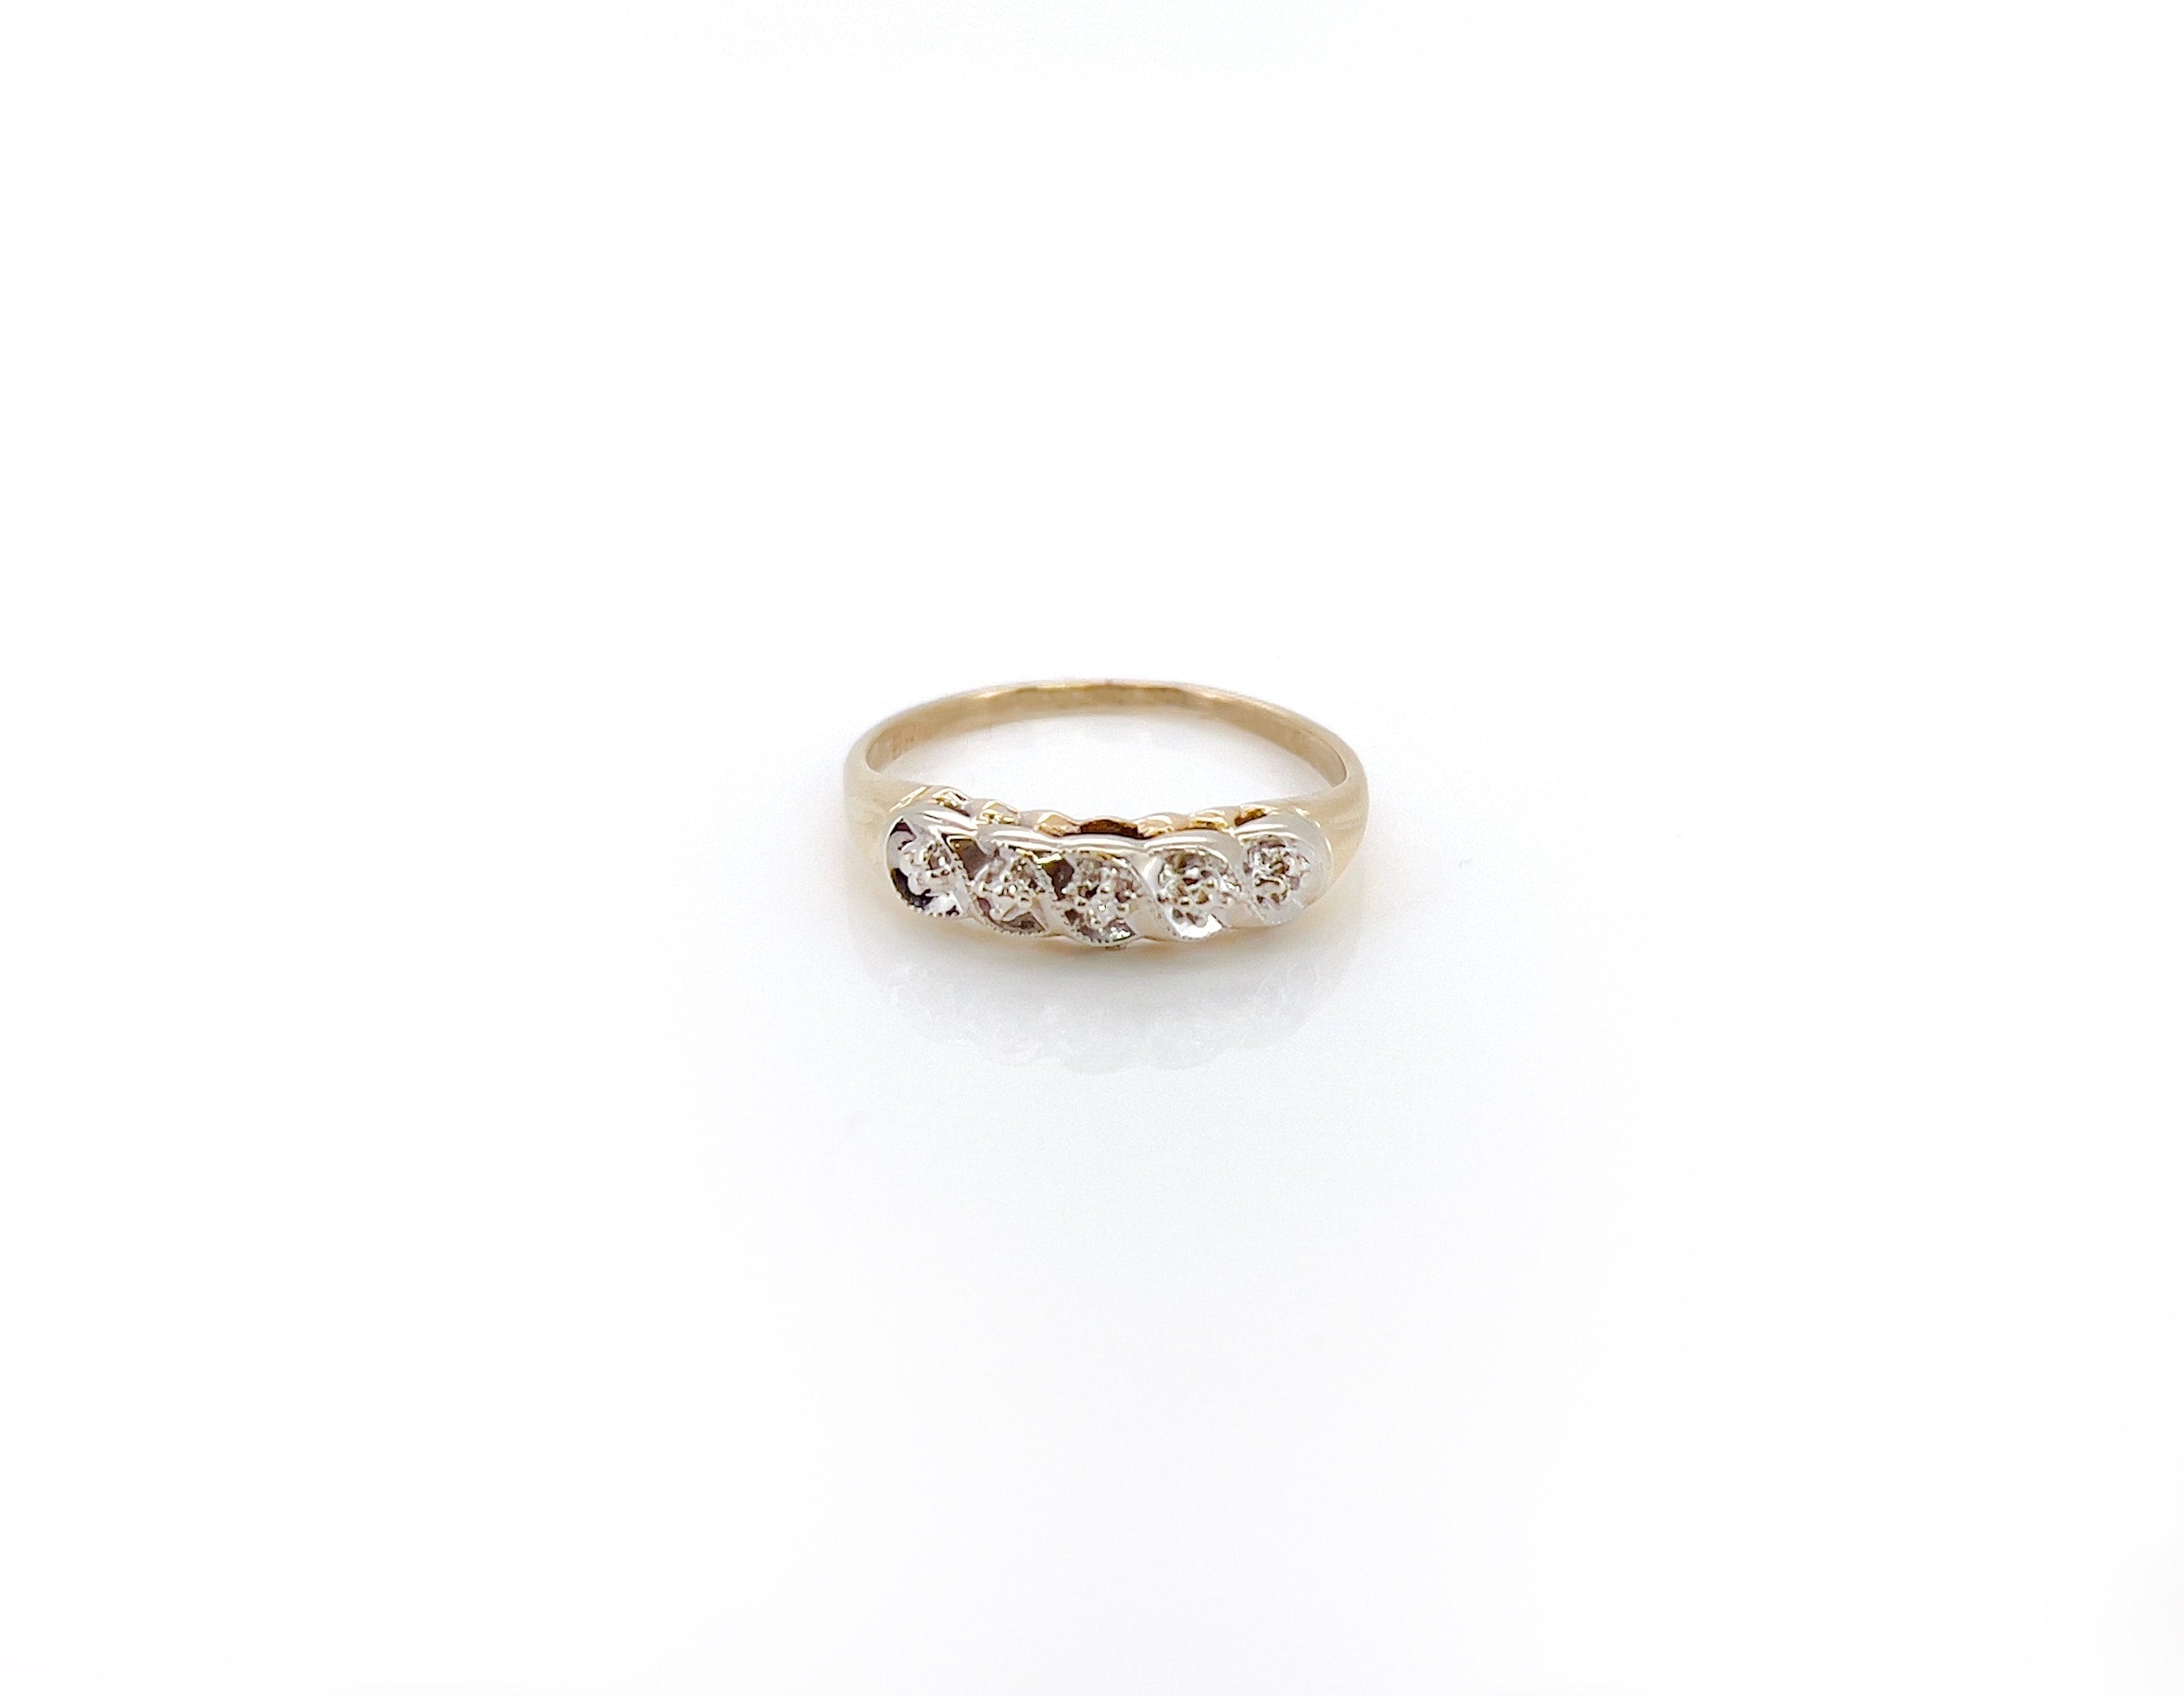 Vintage Two Tone Single Cut Diamond Ring, Size 5.25